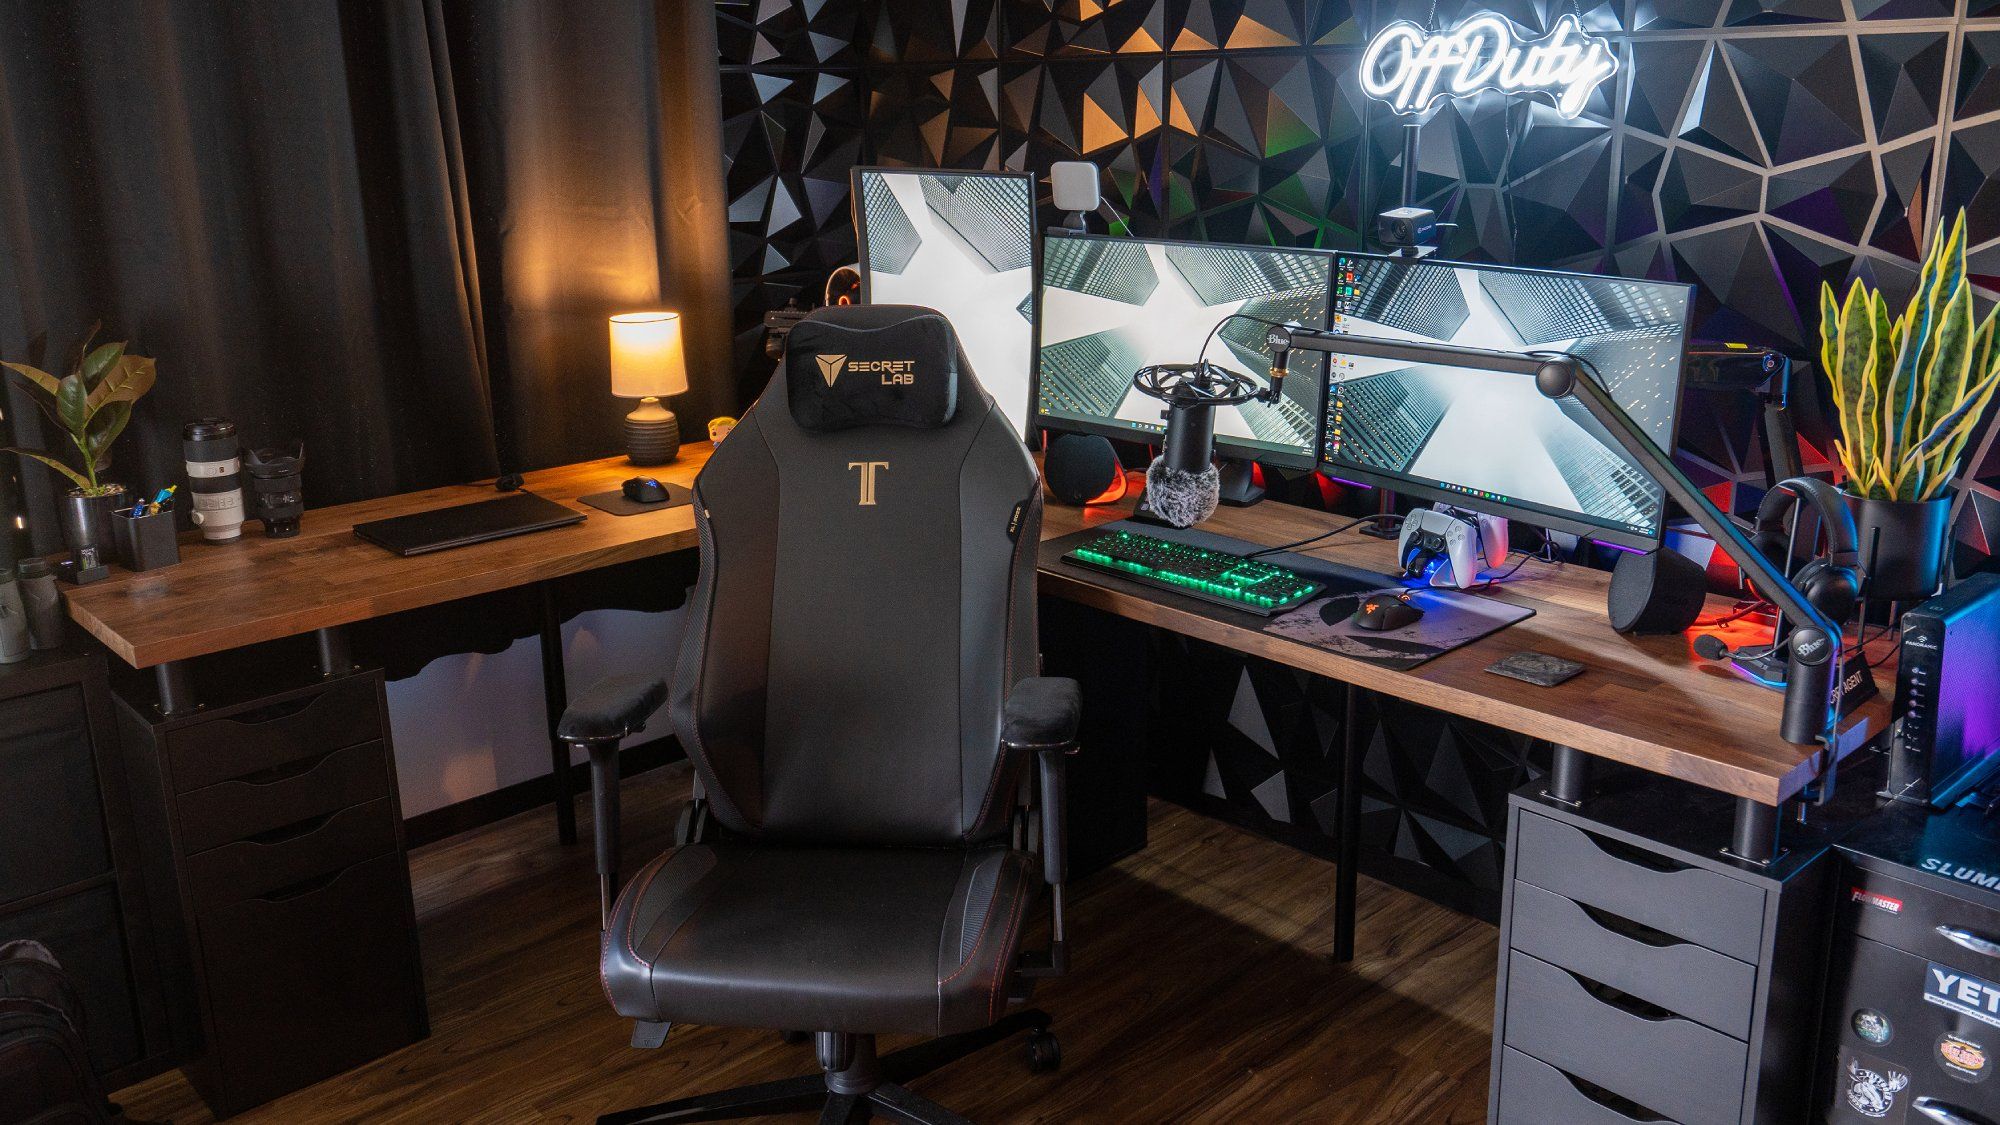 A gaming setup featuring Secretlab chair